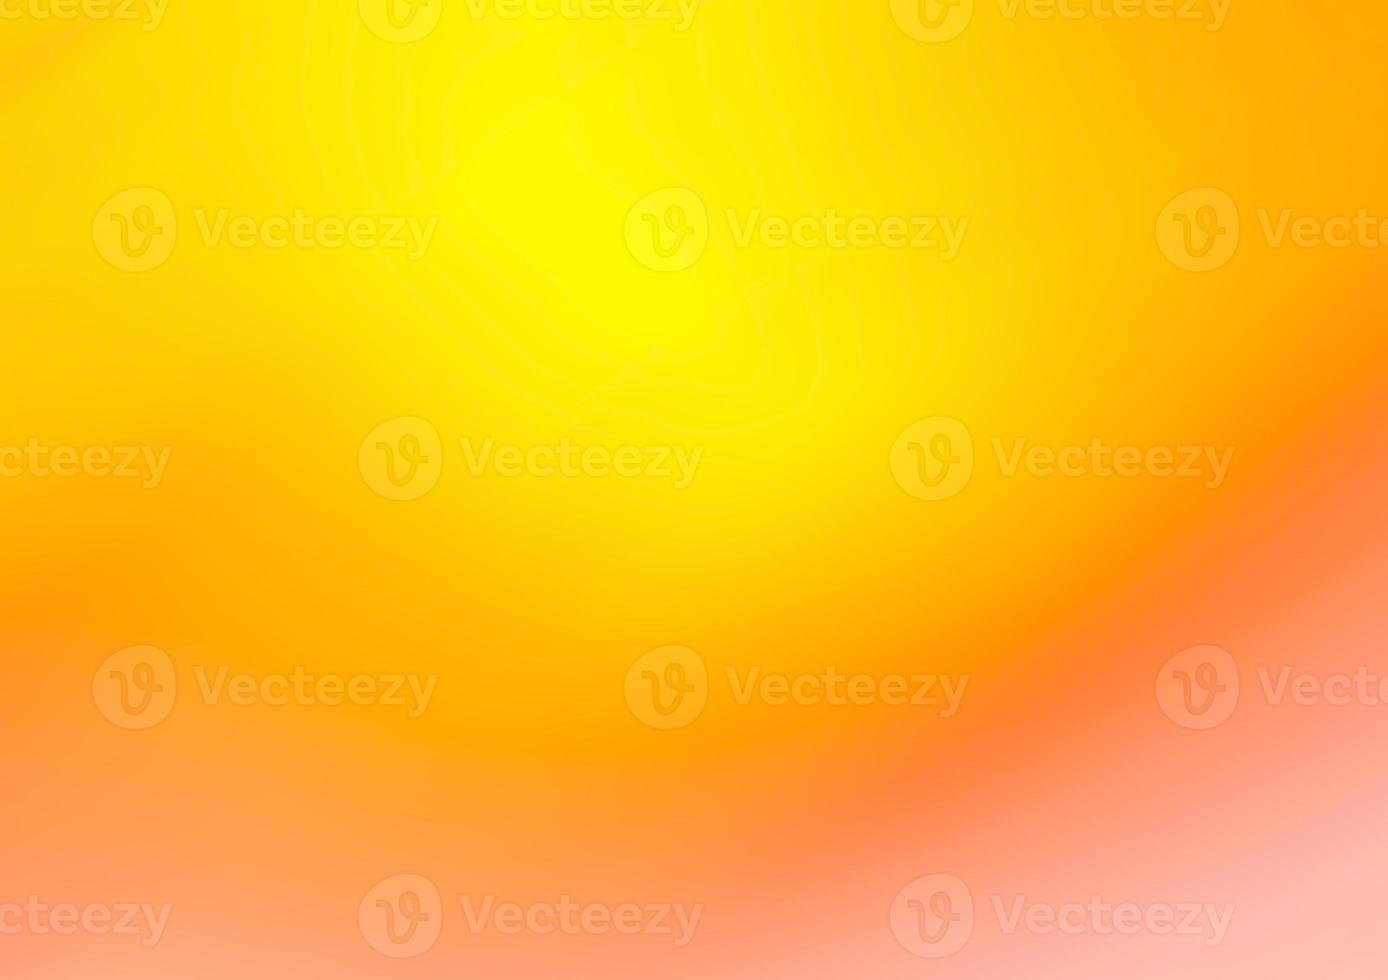 resumen fondo,amarillo o naranja degradado fondo, amarillo o naranja borroso fondo, amarillo o naranja difuminar suave degradado fondo de pantalla, fondo de pantalla para un bandera sitio web o social medios de comunicación publicidad. foto